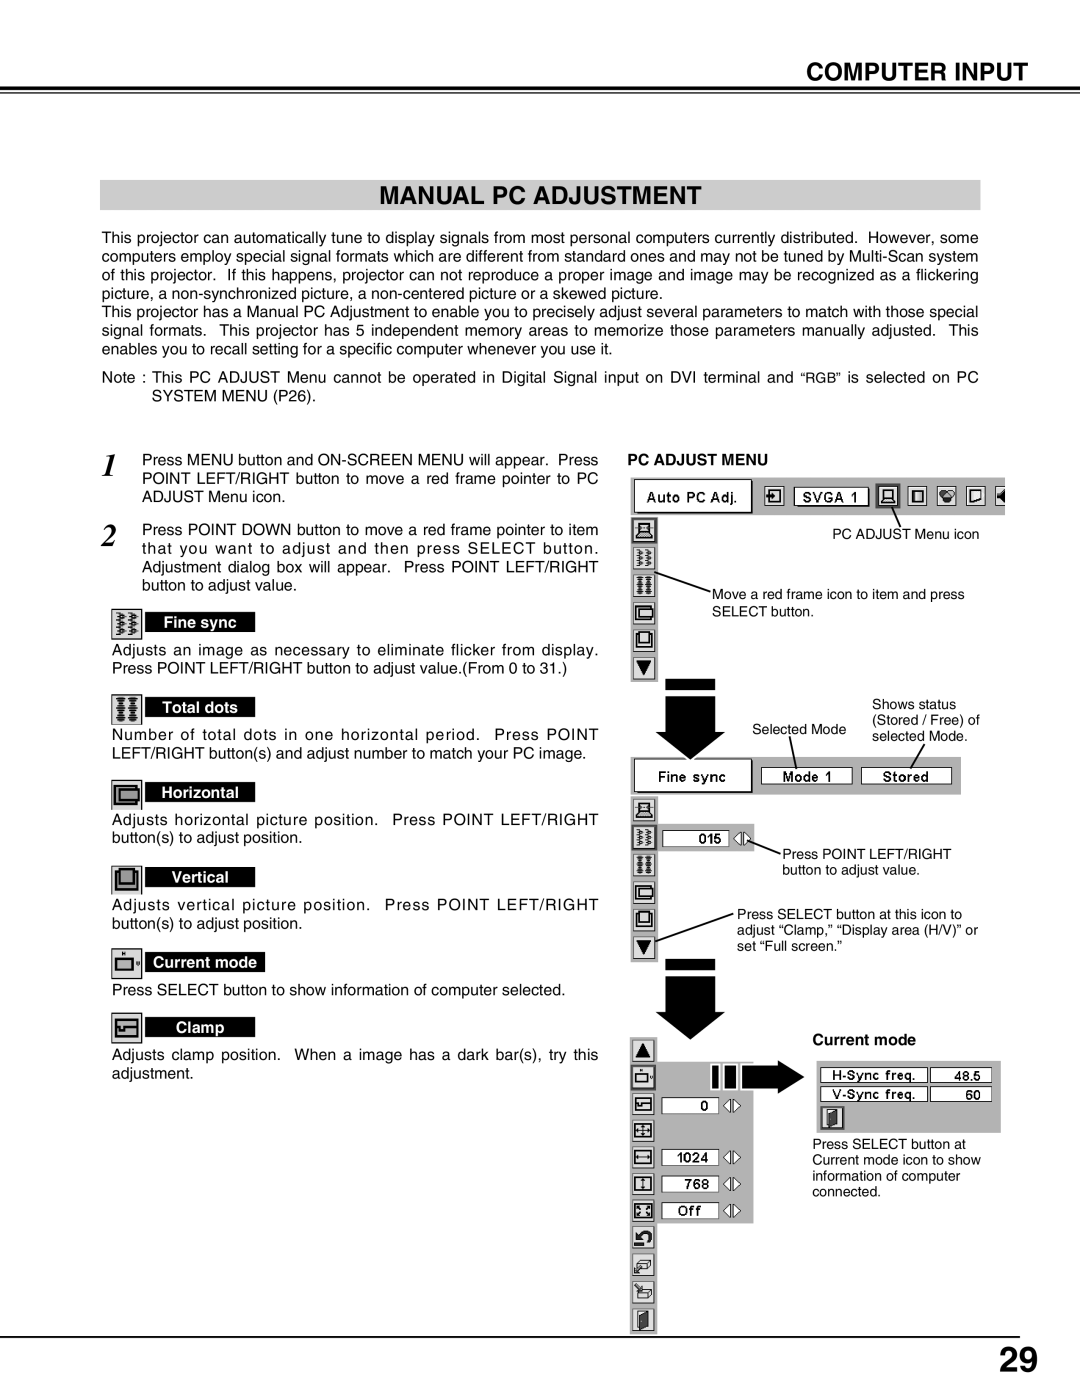 Christie Digital Systems 38-MX2001-01 Computer Input Manual Pc Adjustment, Fine sync, Total dots, Horizontal, Vertical 